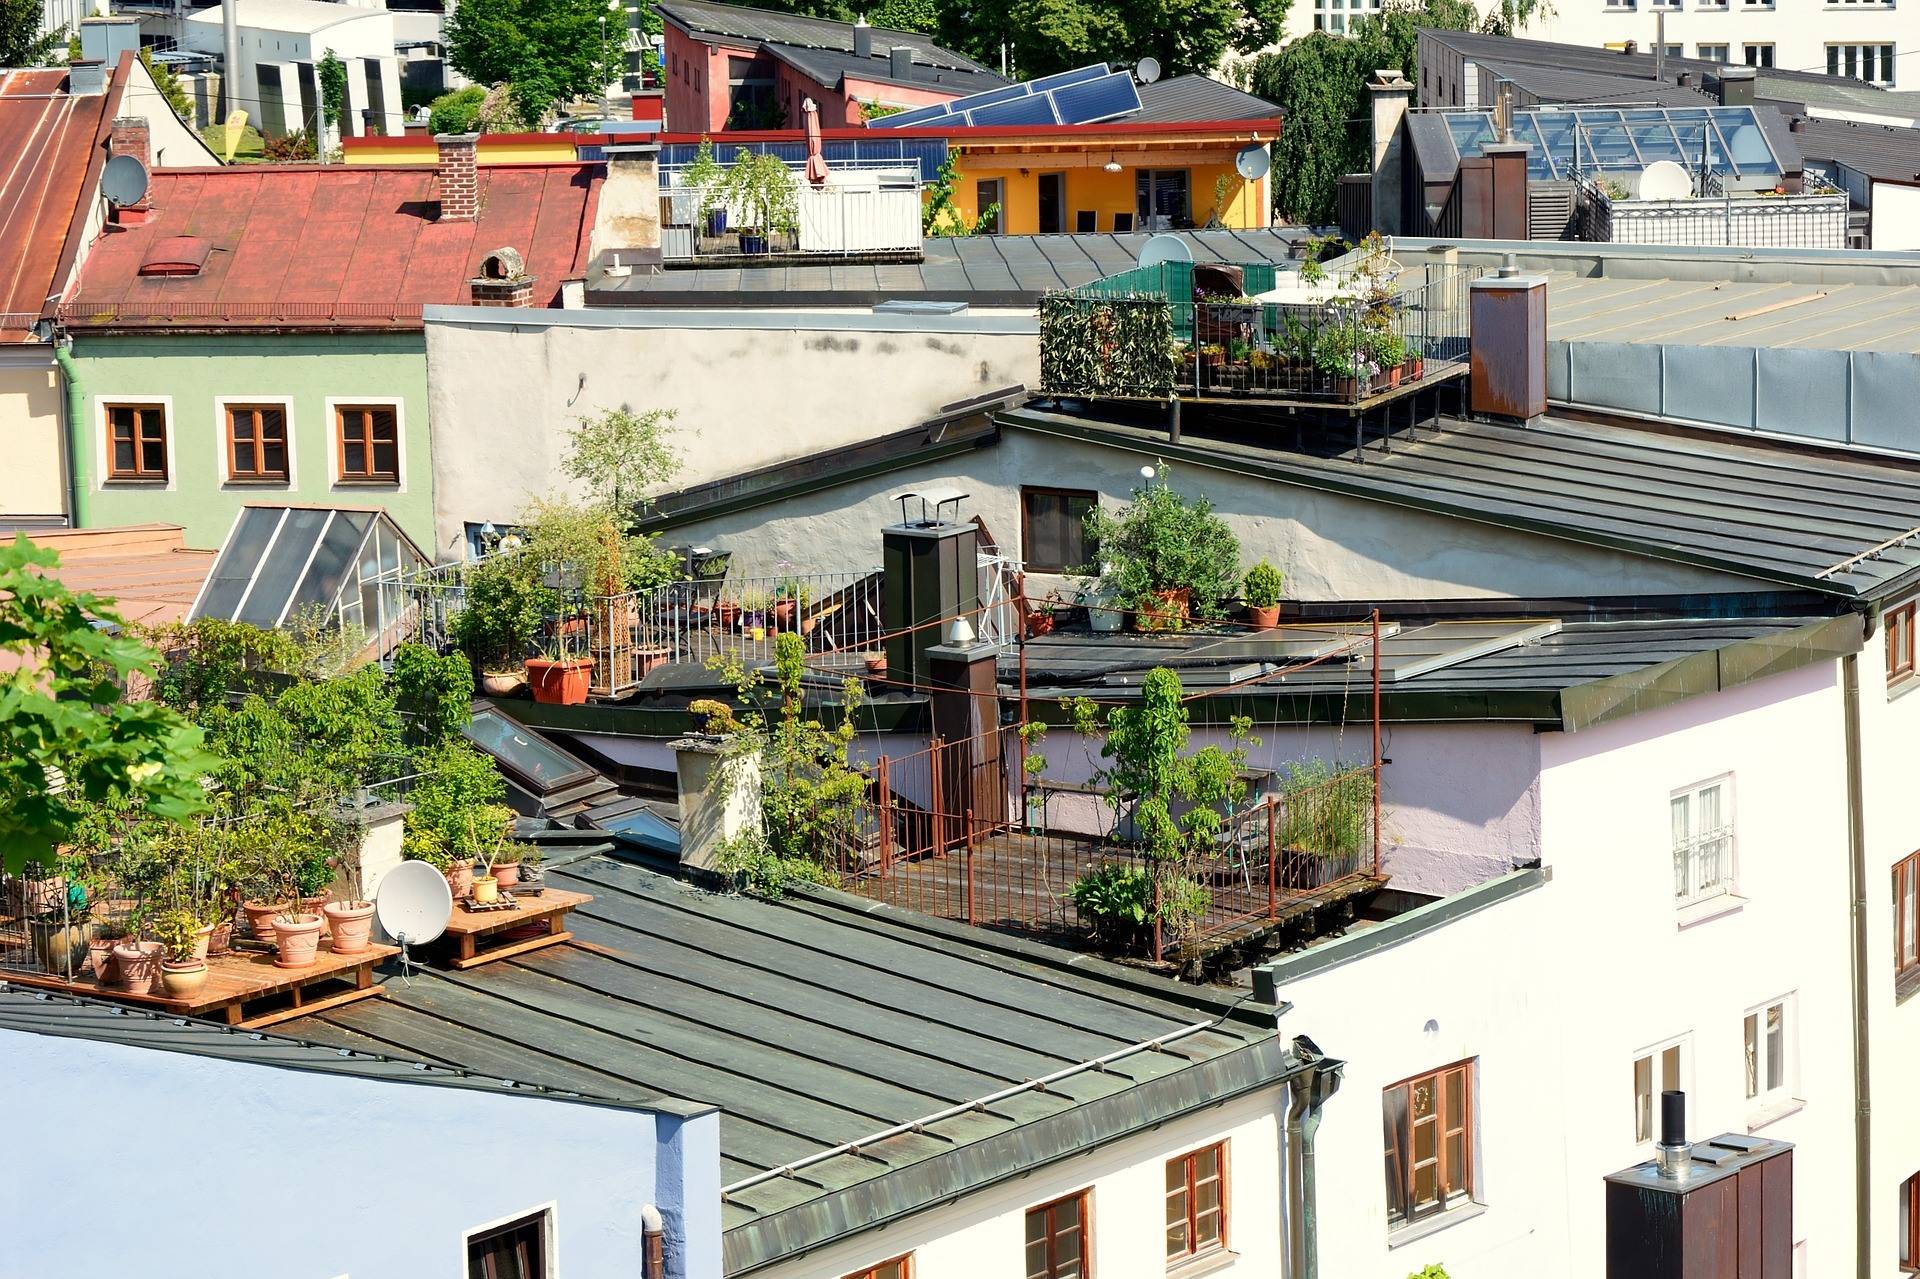 Roof Garden Design Ideas